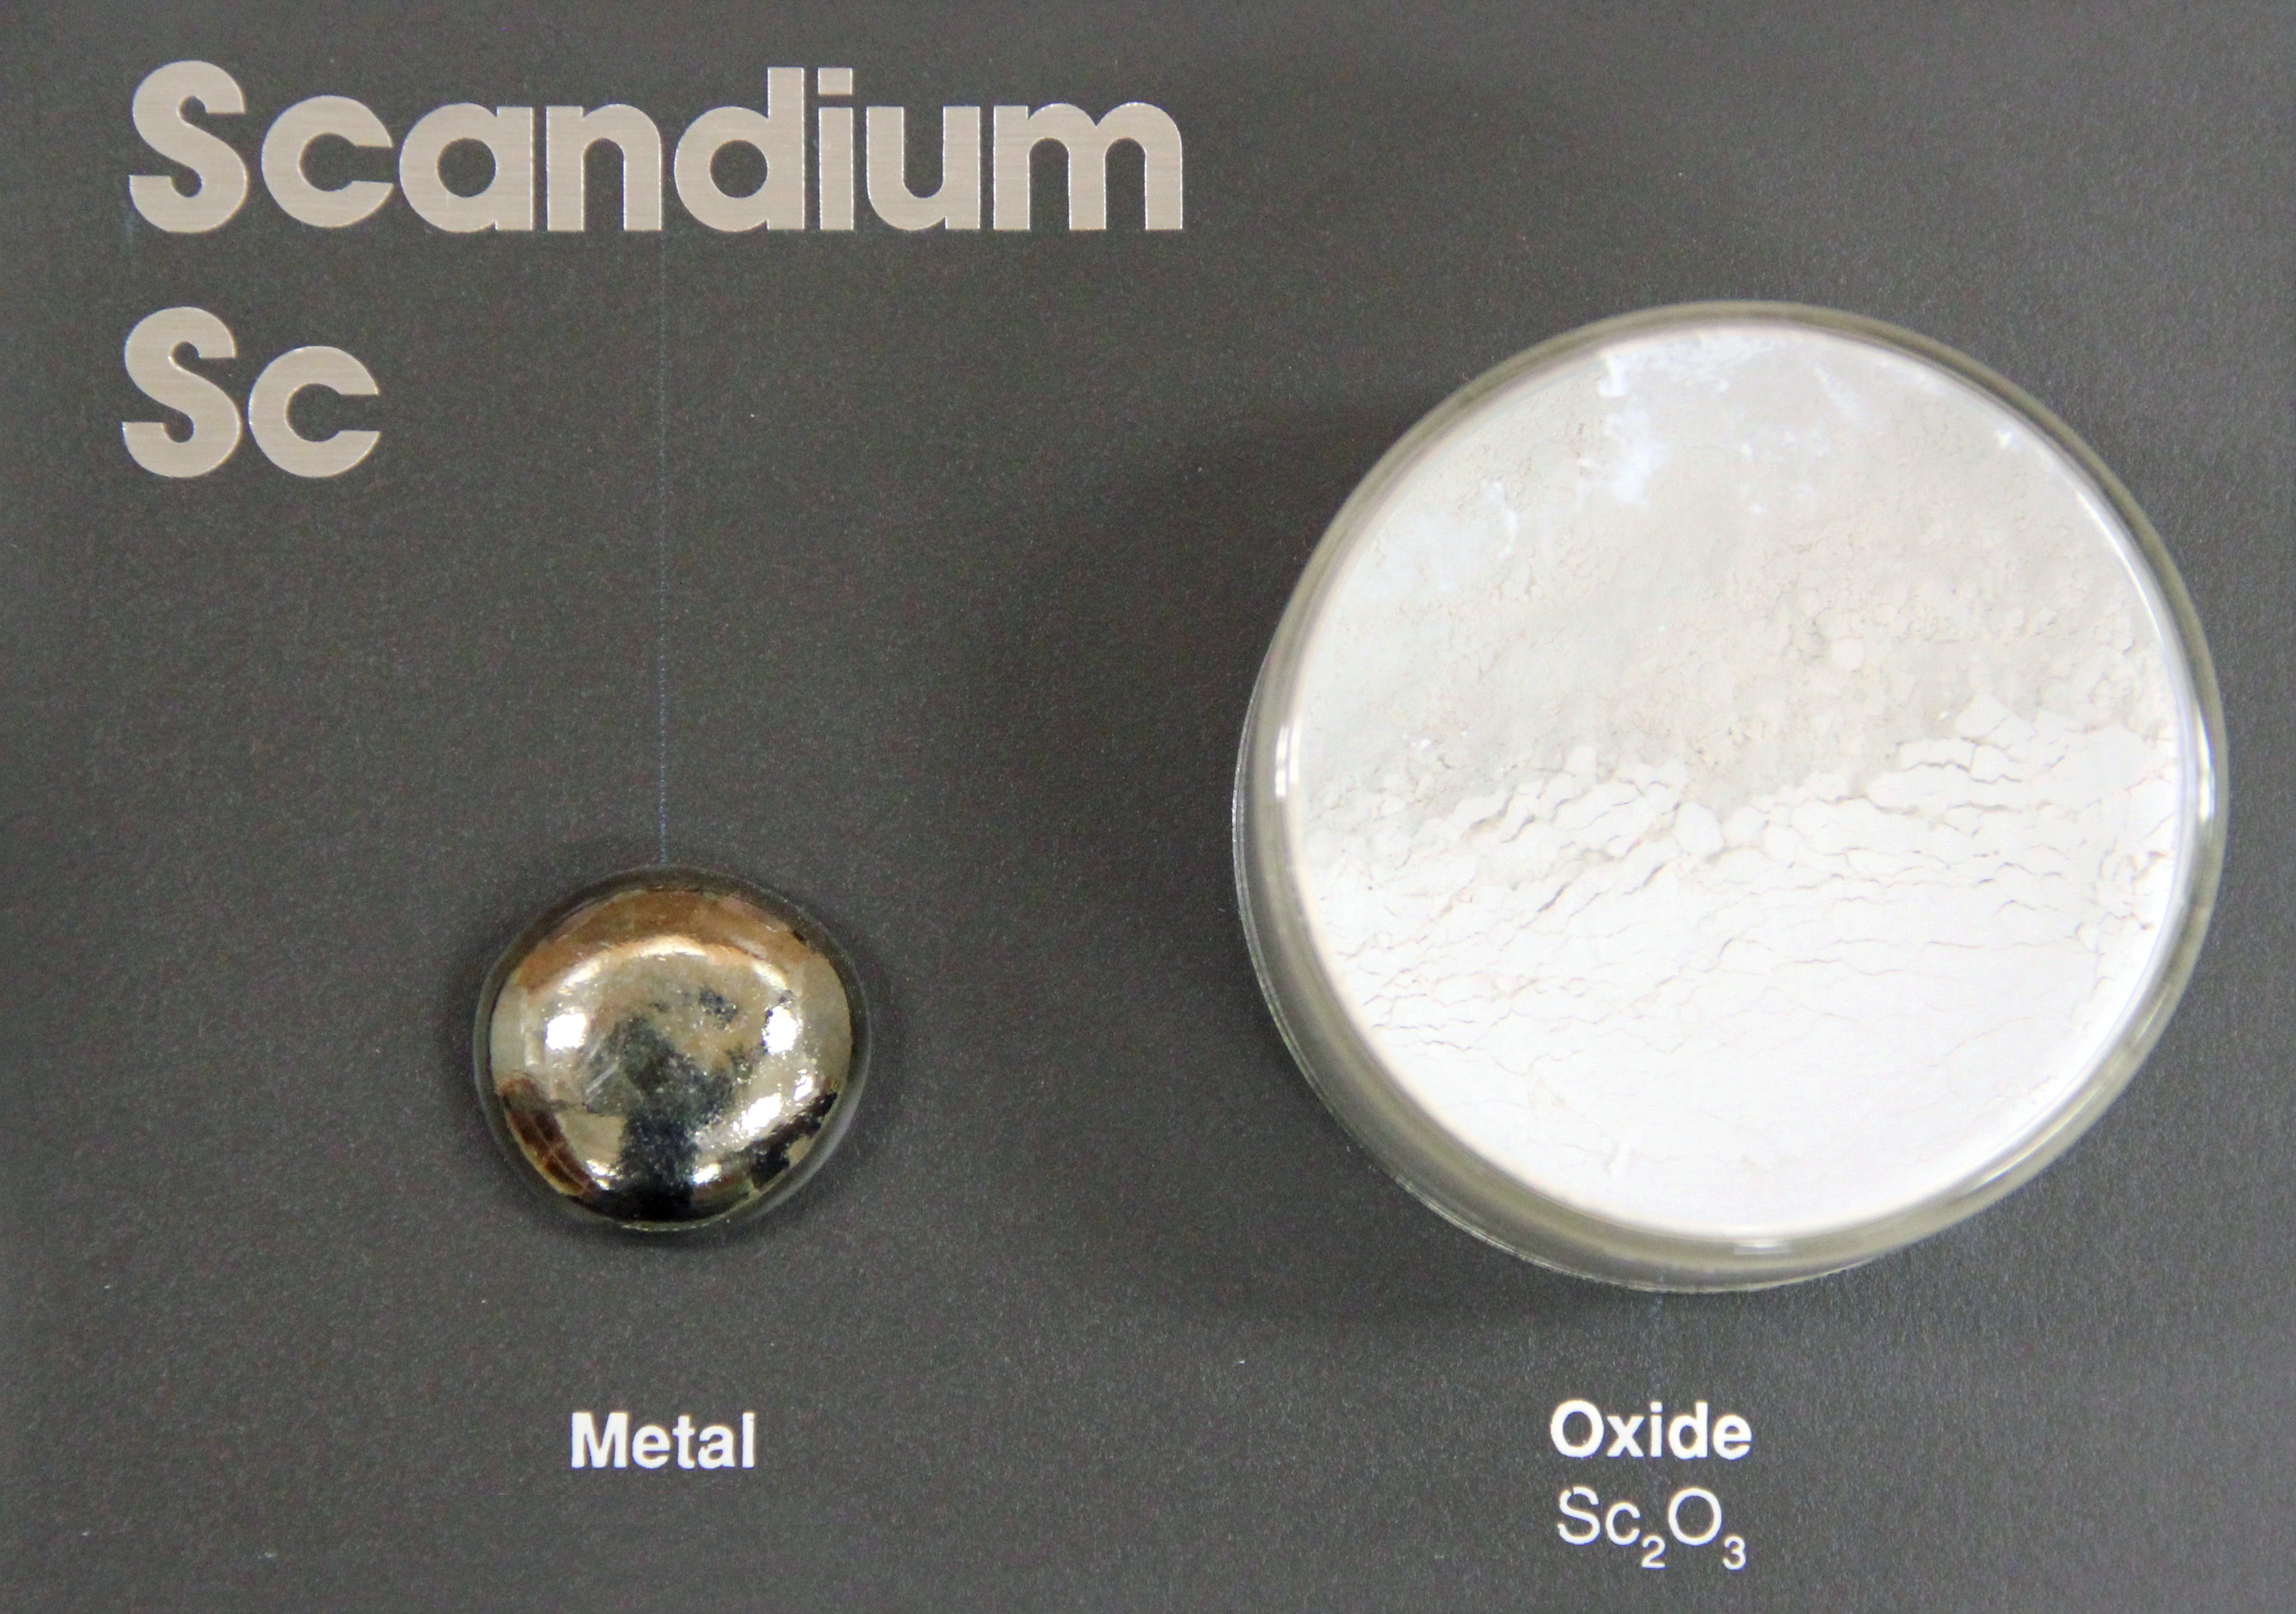 Scandium metal and Scandium oxide